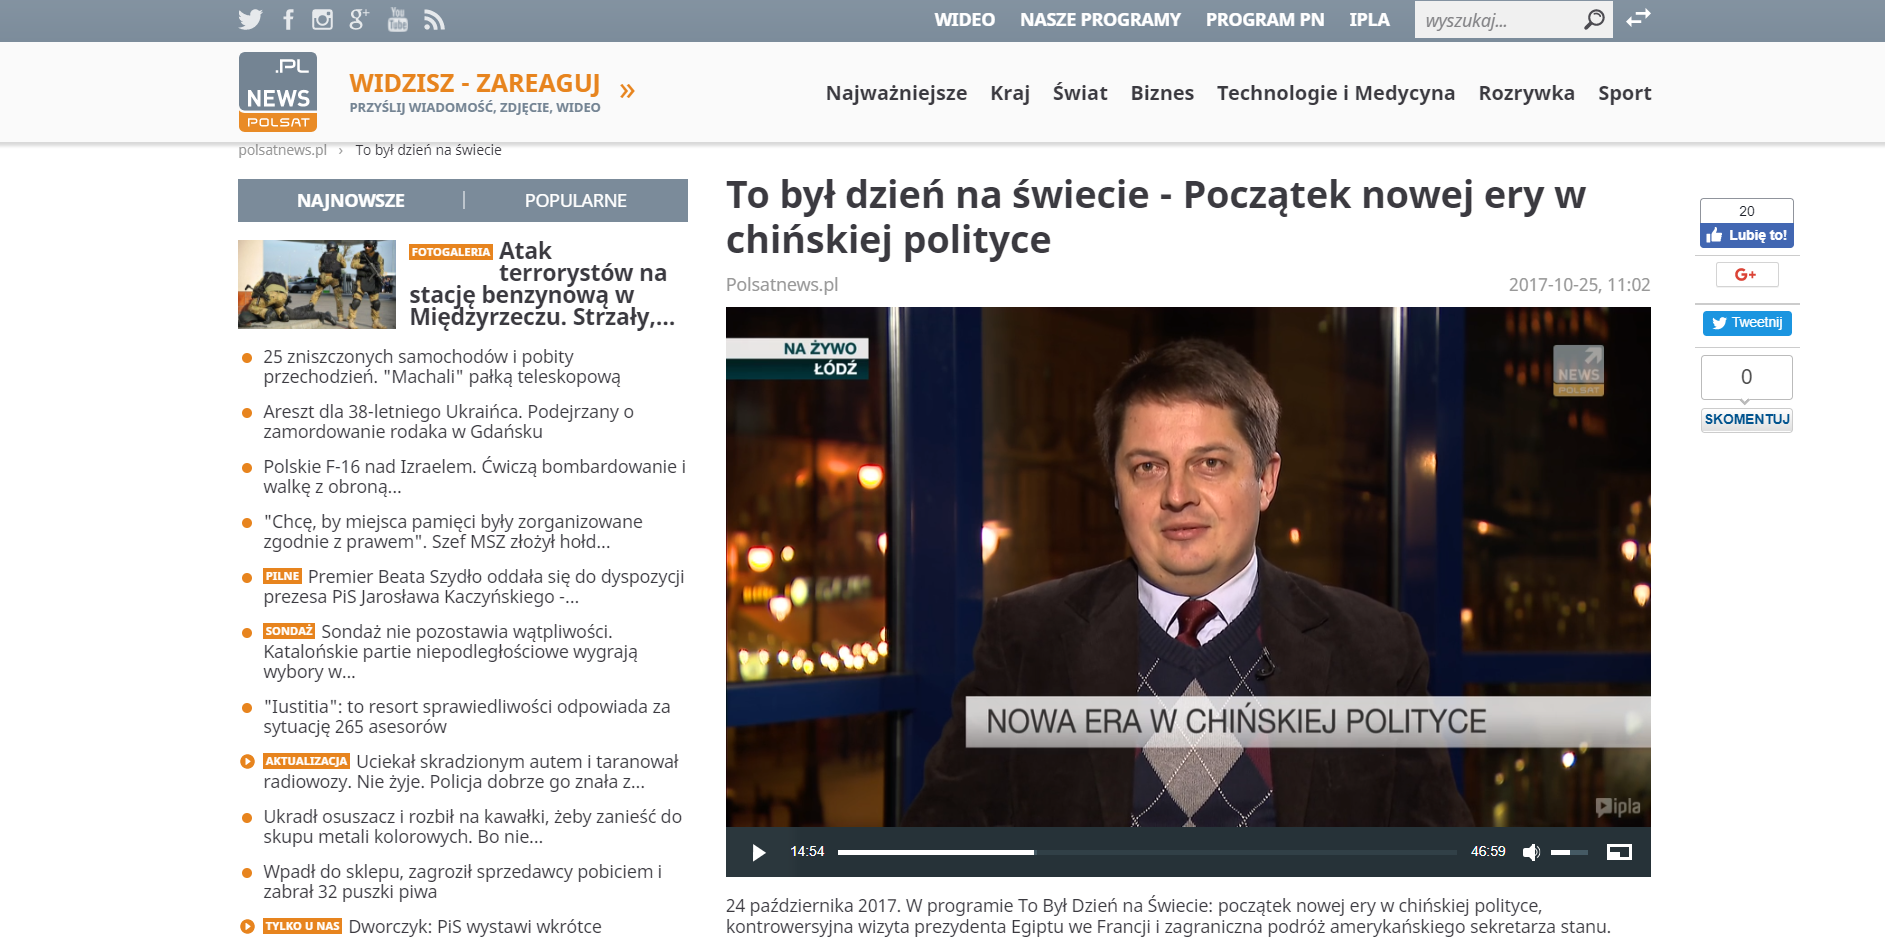 Zrzut ekranu strony internetowej Polsatu/Screenshot of the Polsat website